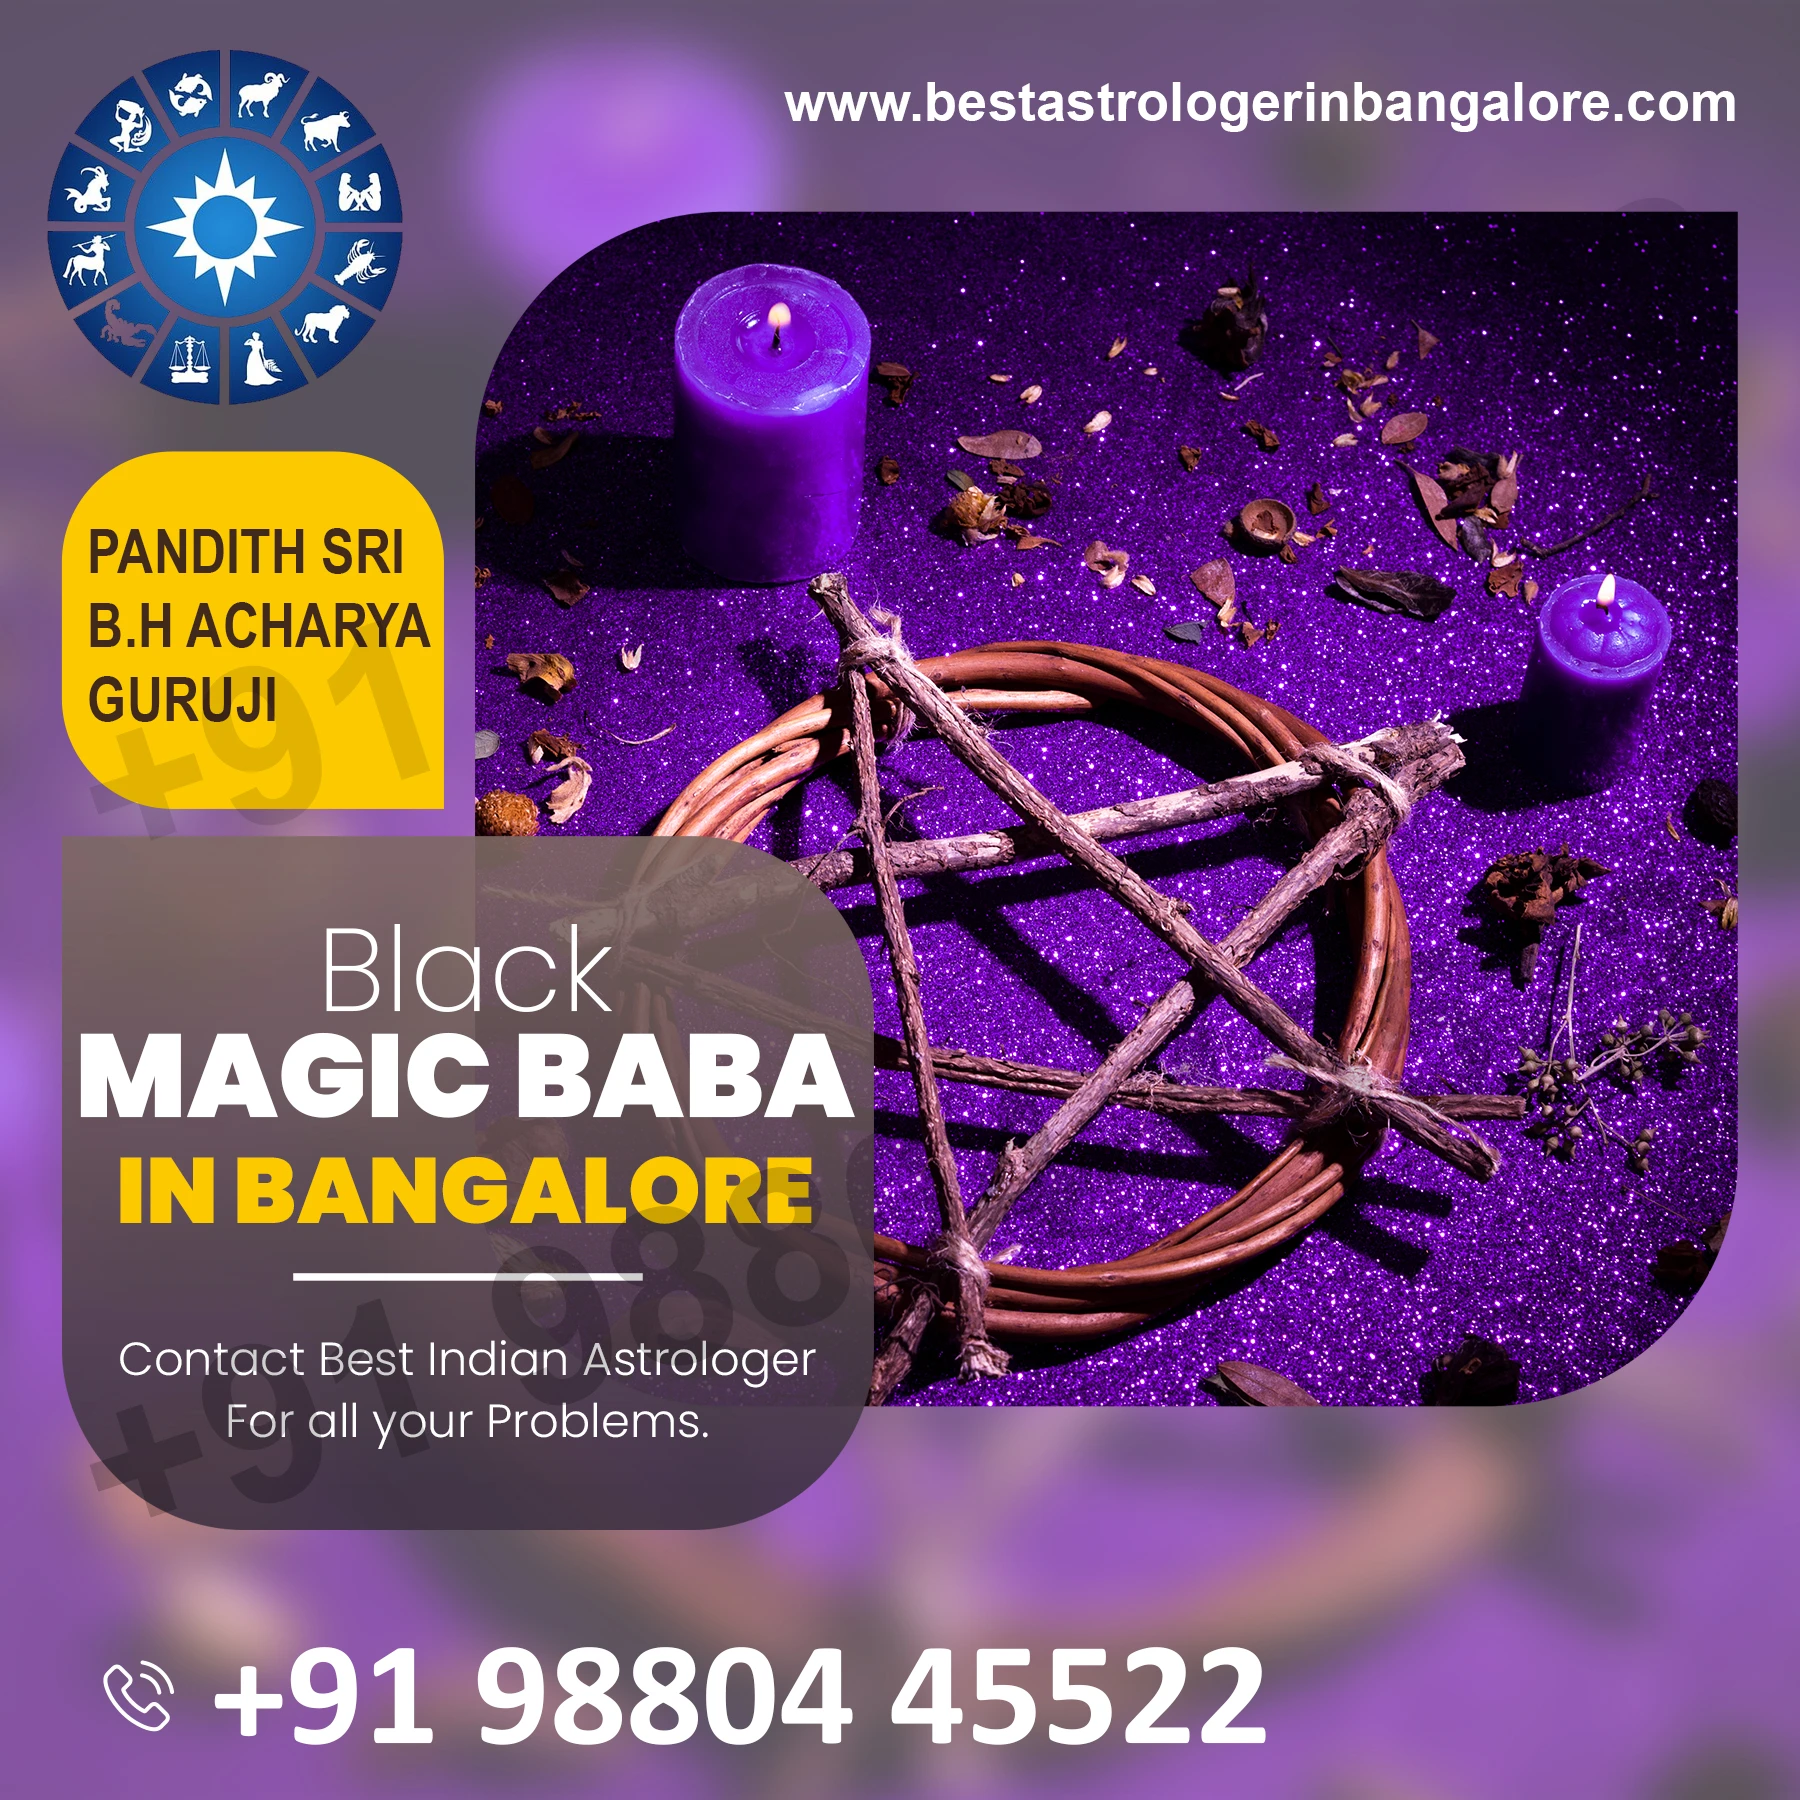 Black Magic Baba in Bangalore